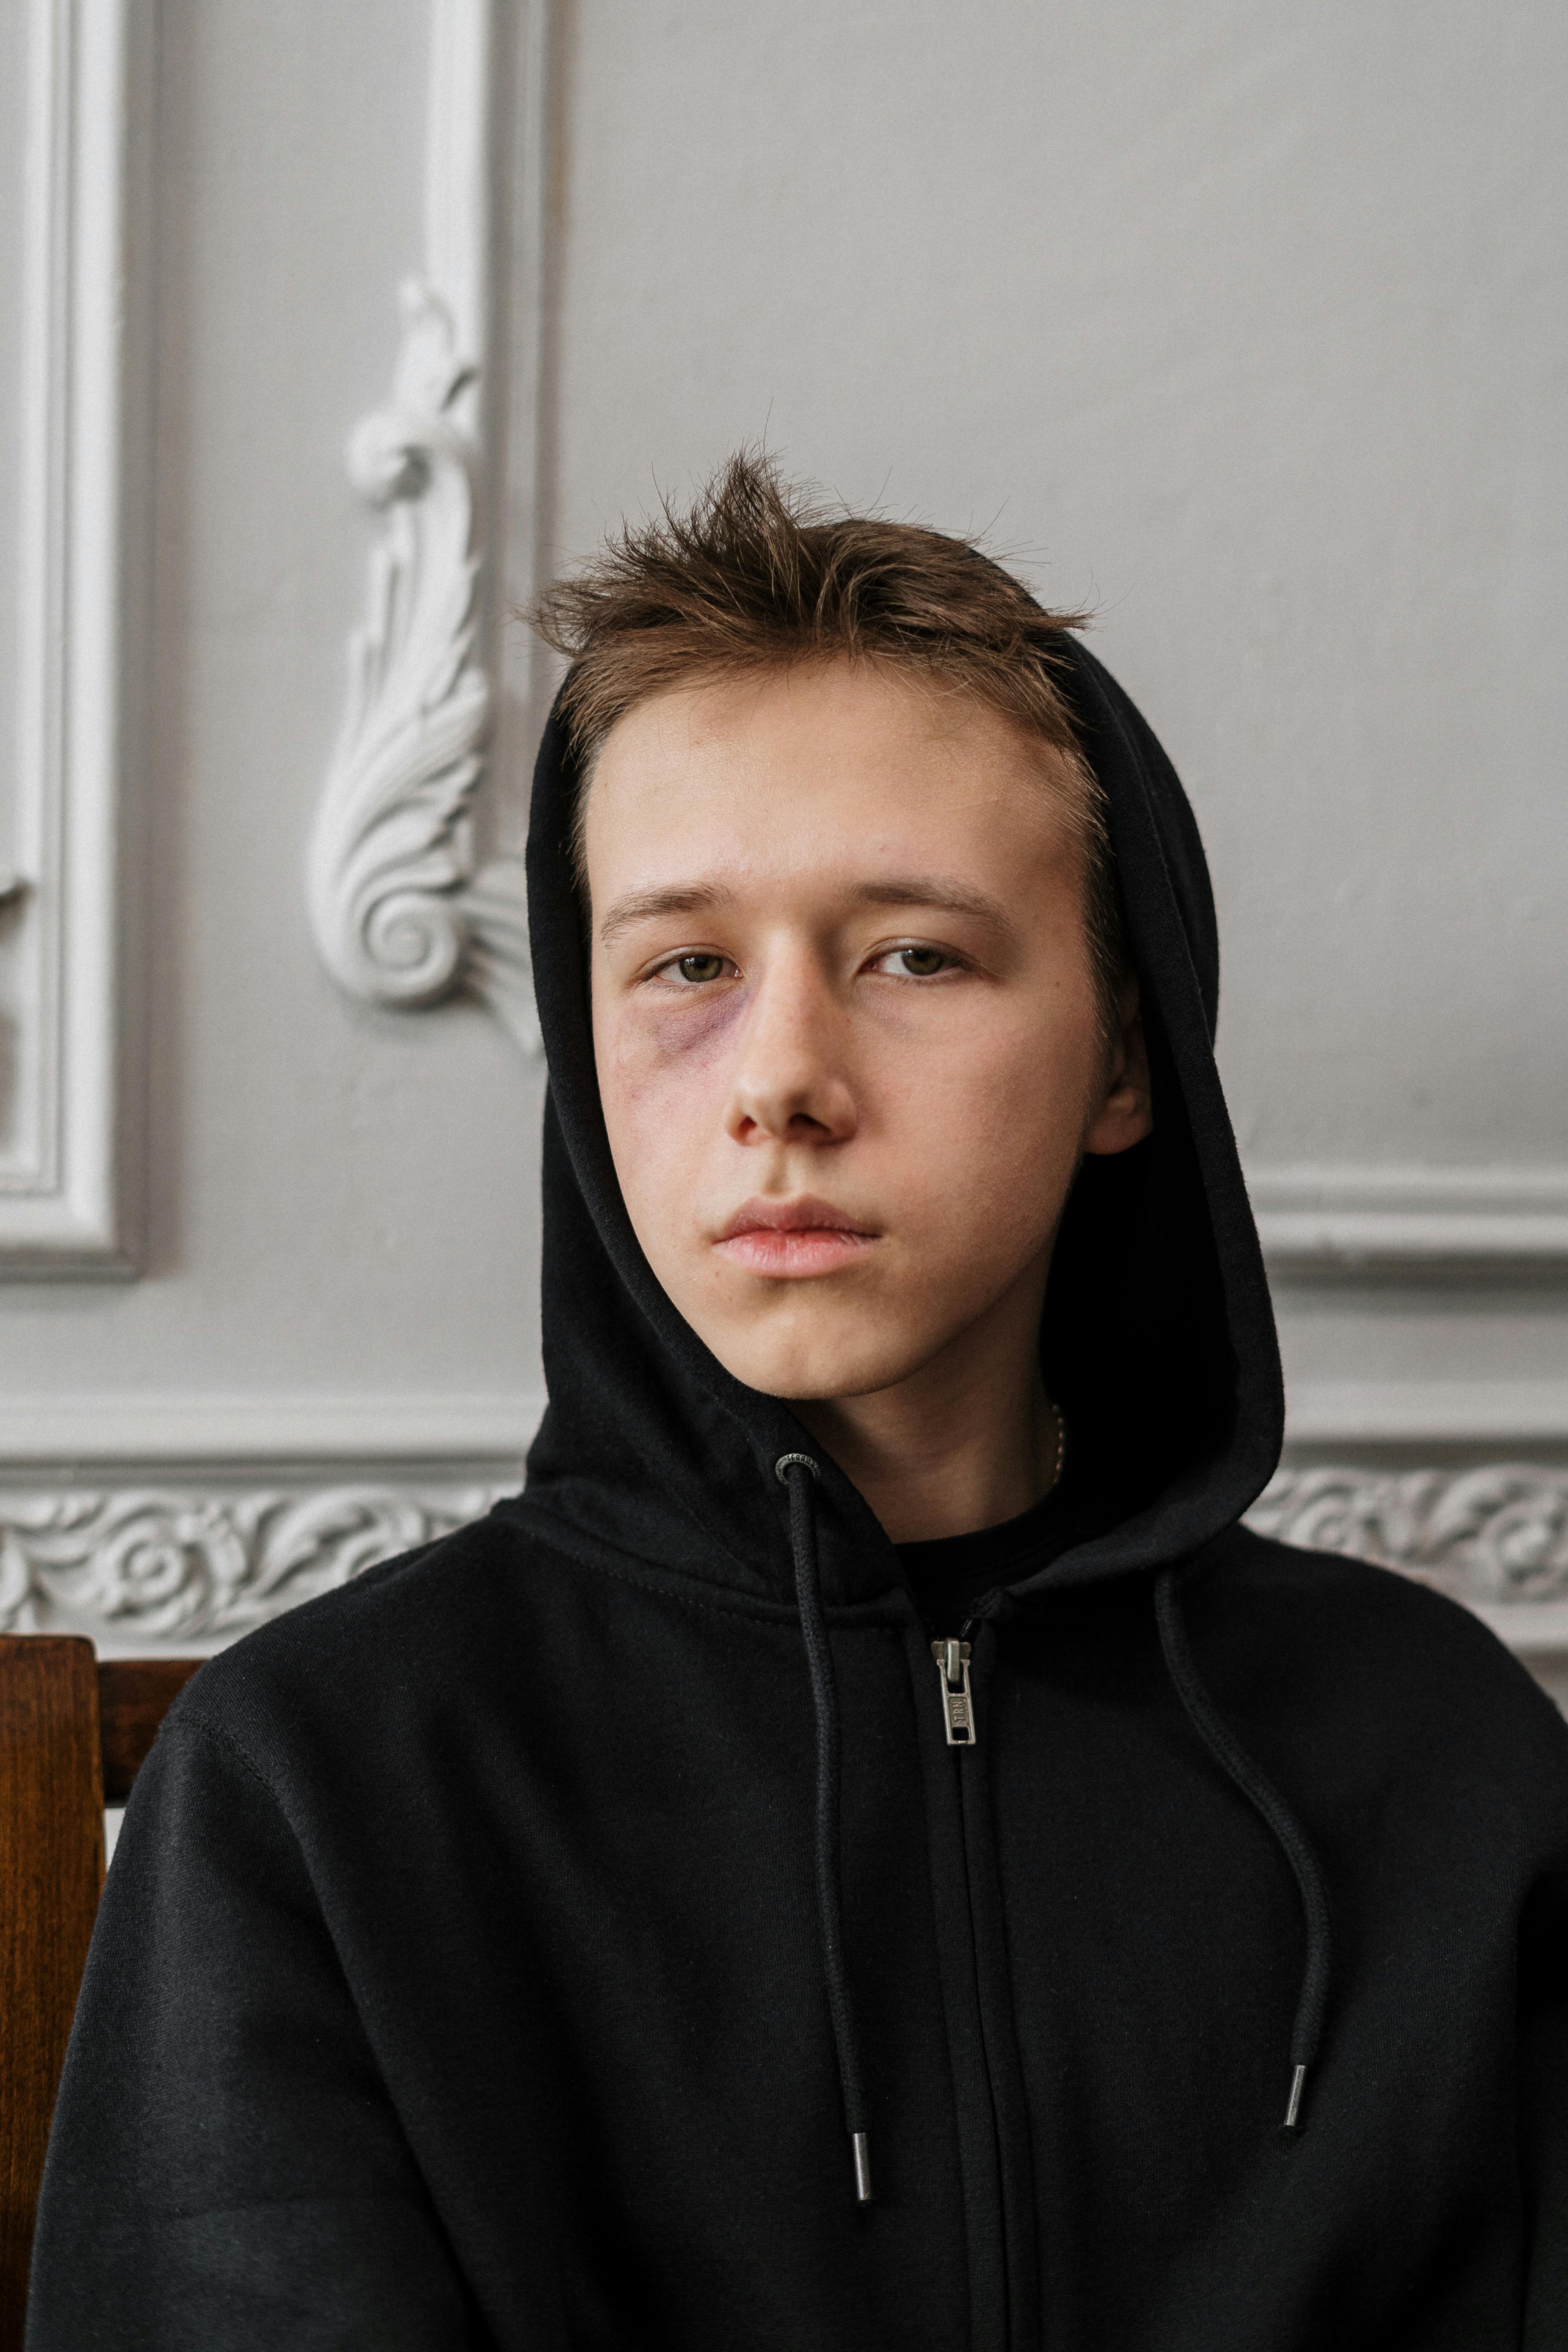 A serious-looking teen | Source: Pexels